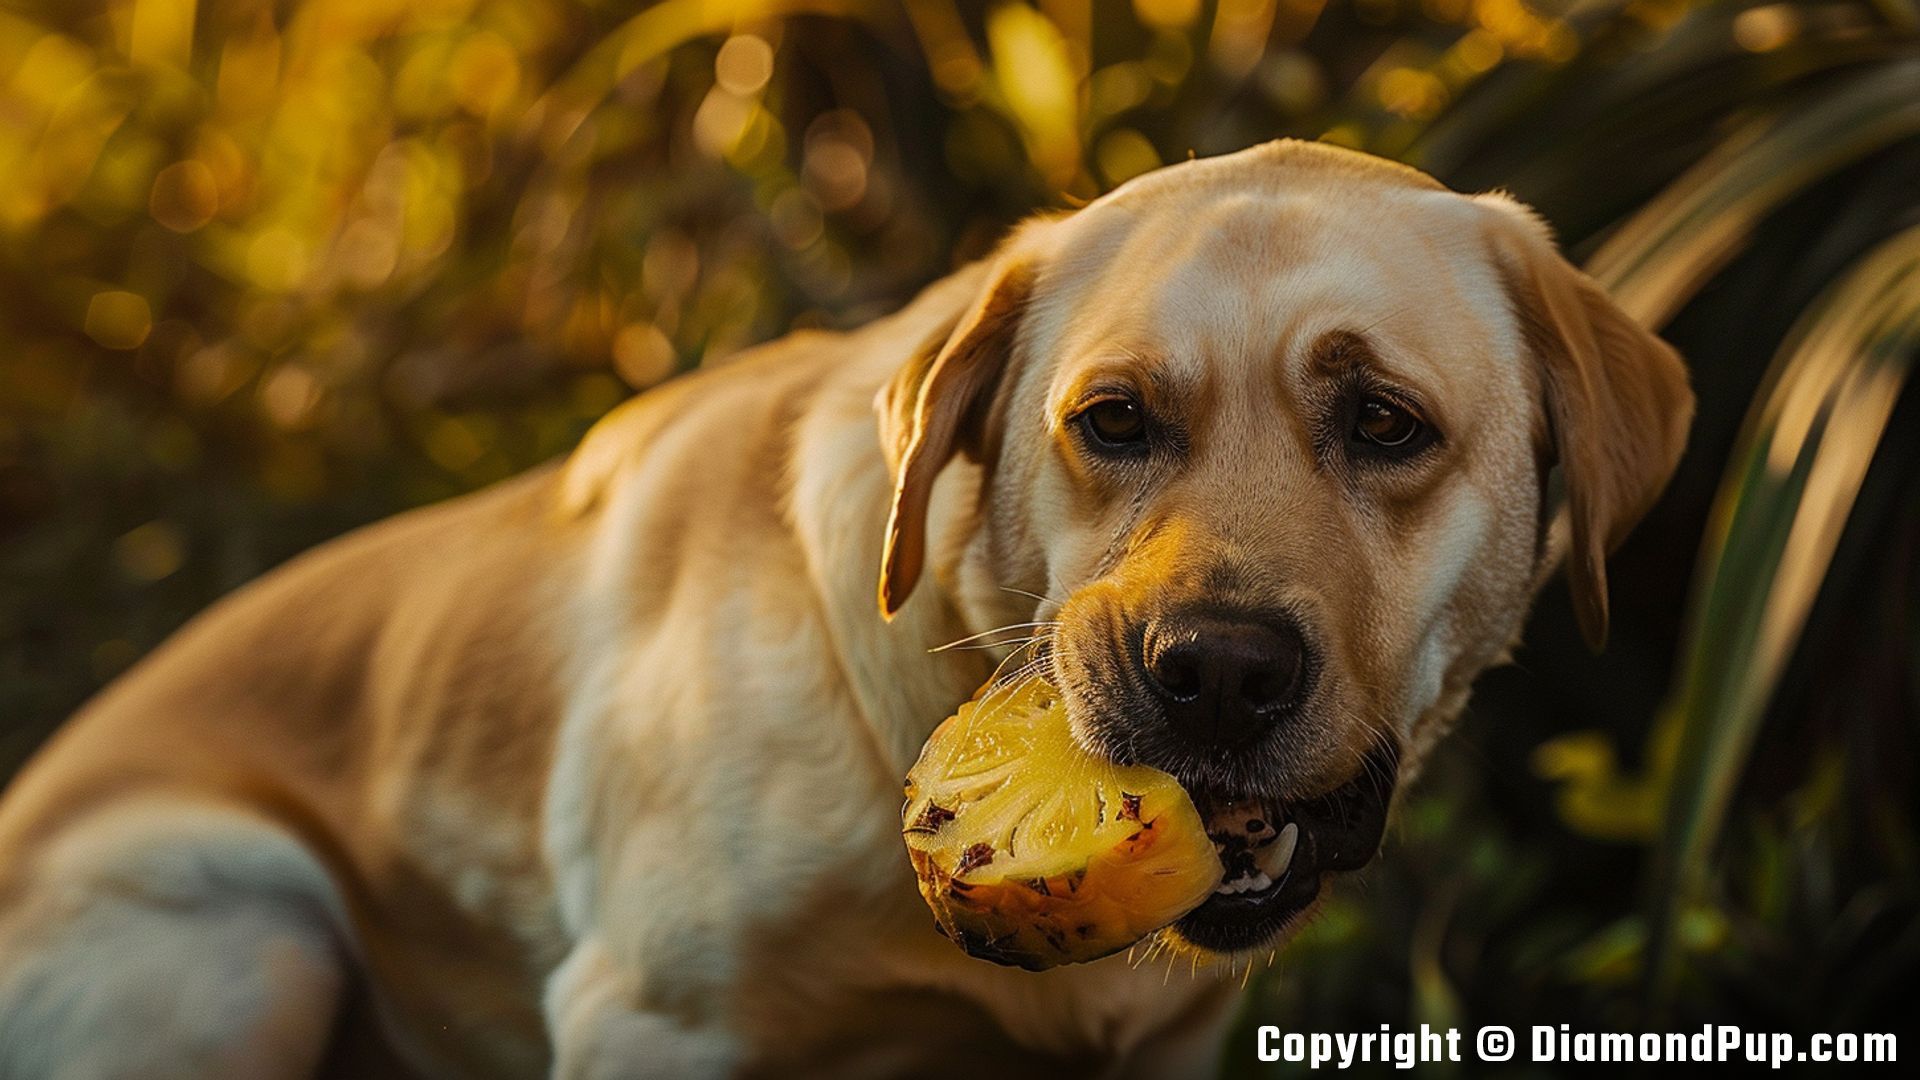 Photograph of an Adorable Labrador Eating Pineapple